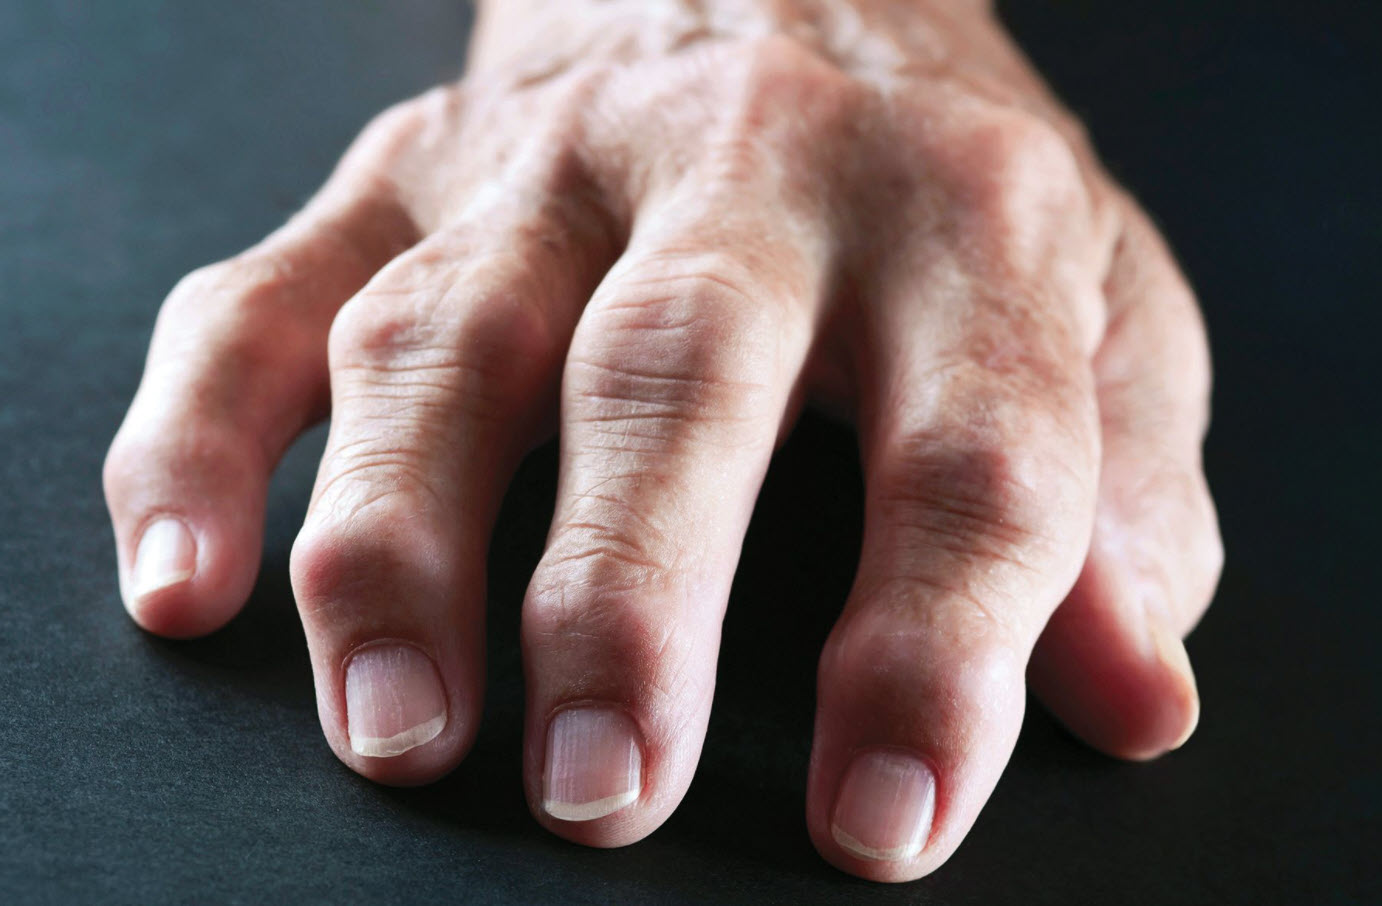 What is Rheumatoid arthritis